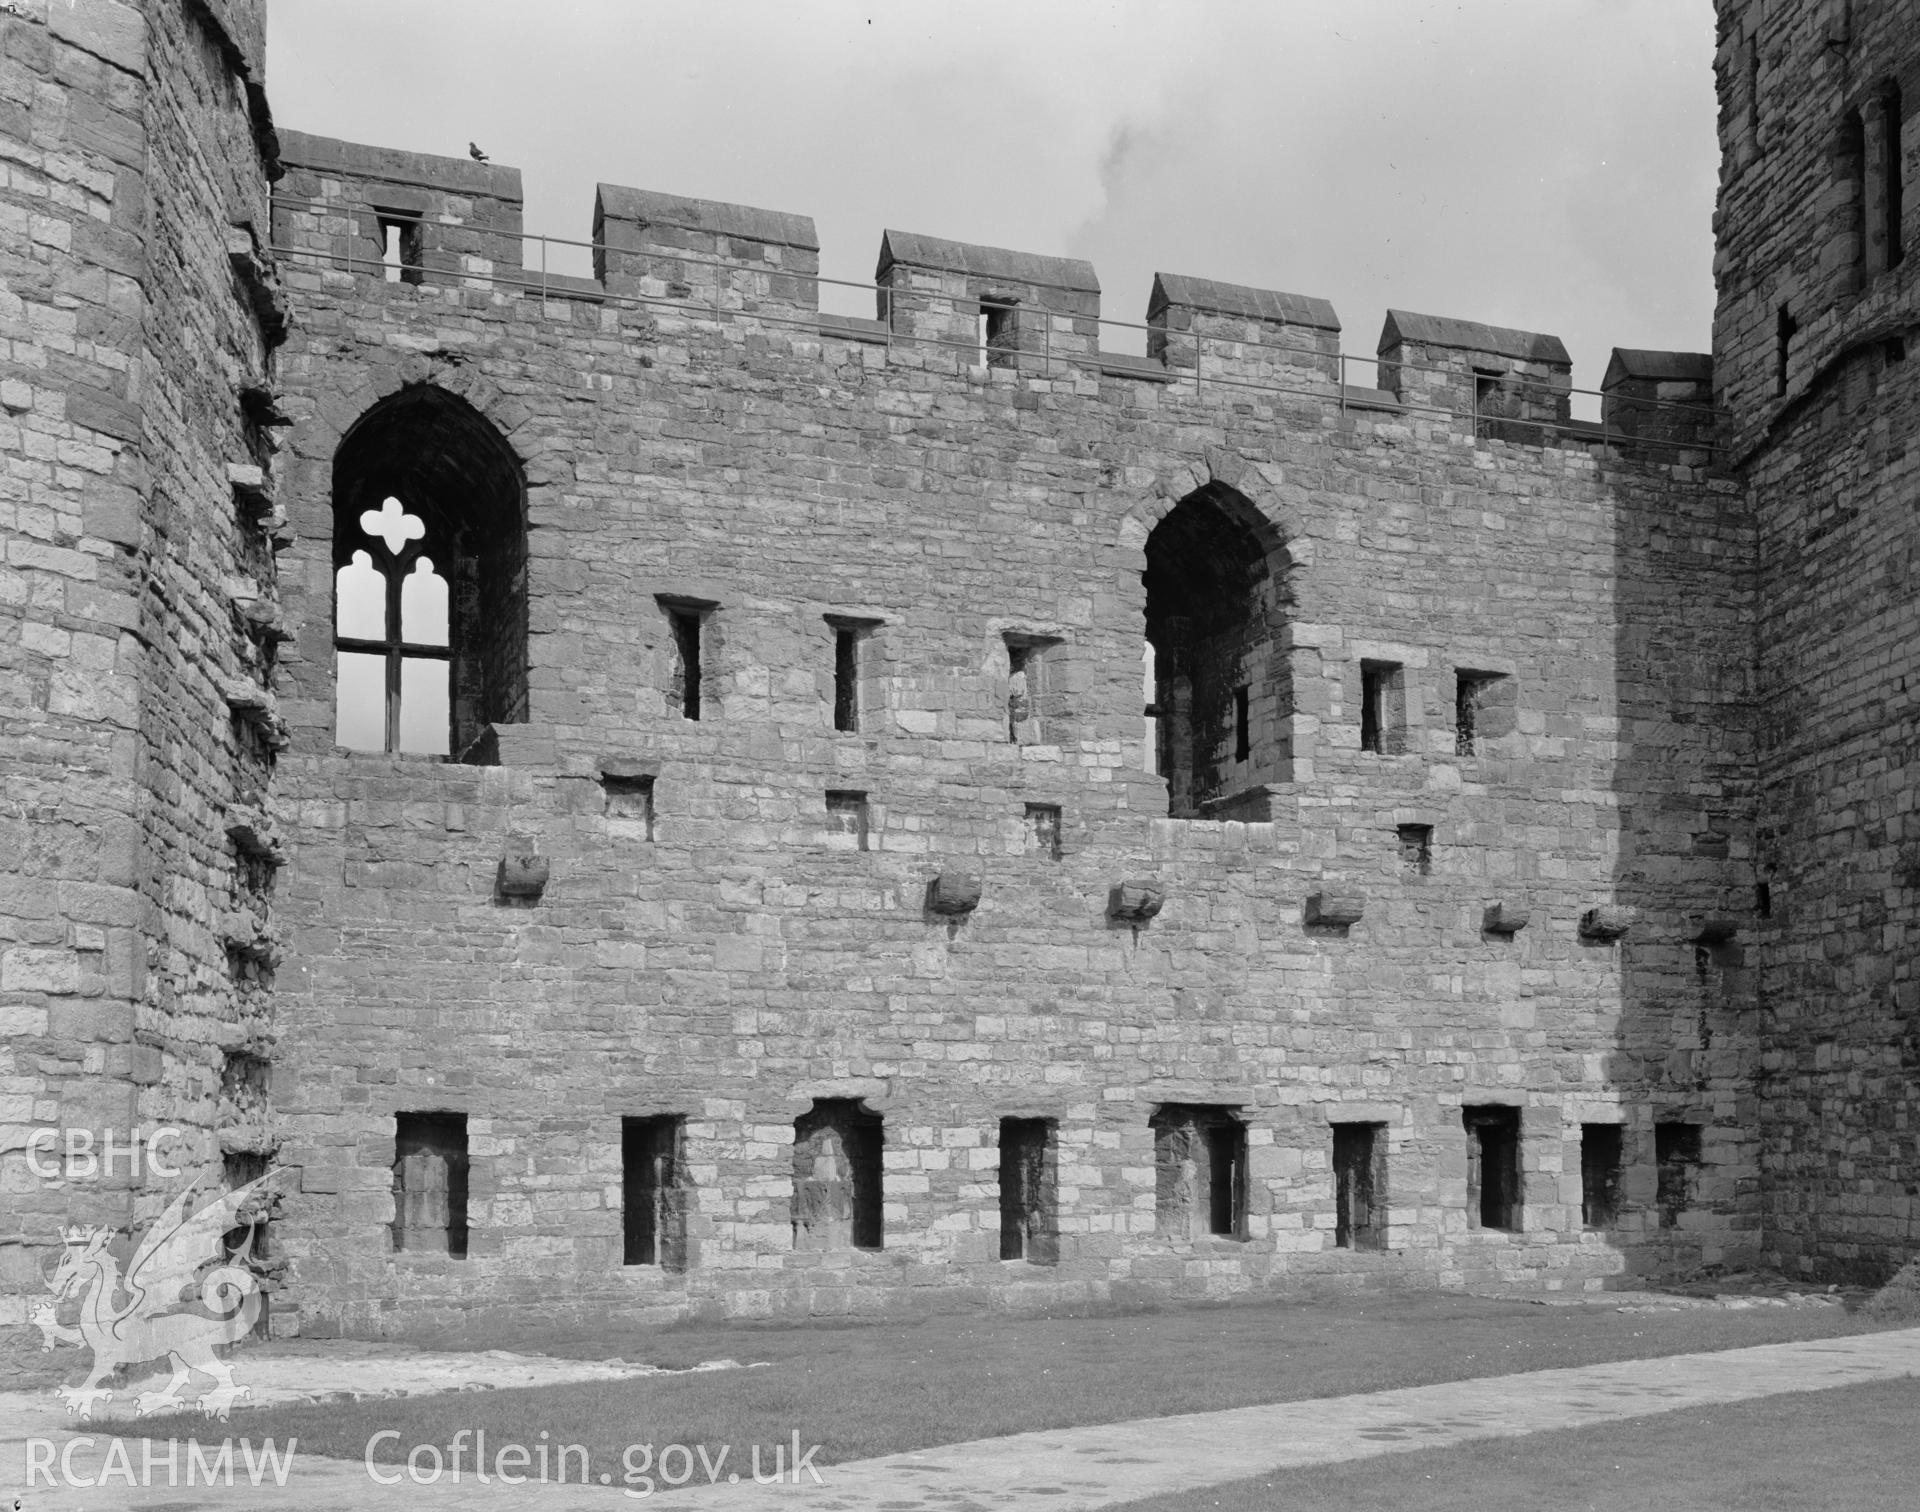 D.O.E photograph of Caernarfon Castle - multiple arrow loops between granary and north east towers.